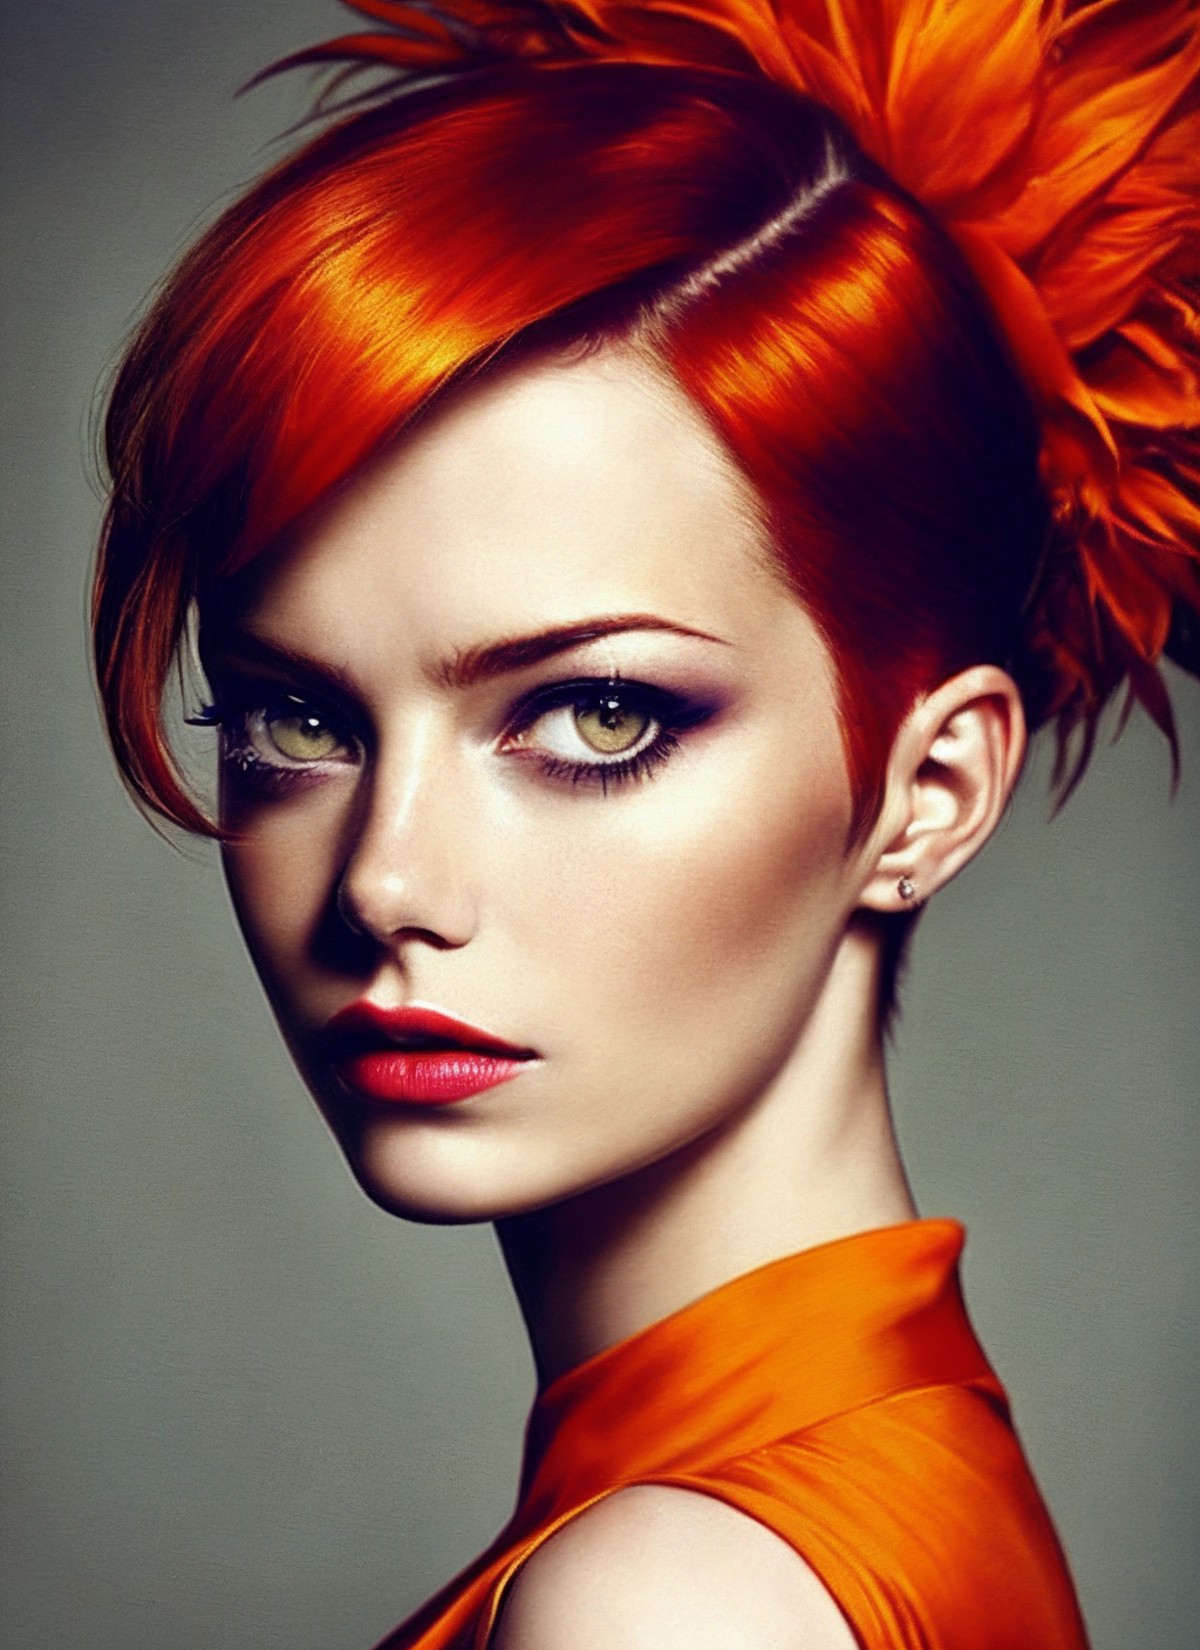 modelshoot style, portrait of sks woman by Flora Borsi, style by Flora Borsi, bold, bright colours, orange Mohawk haircut,...